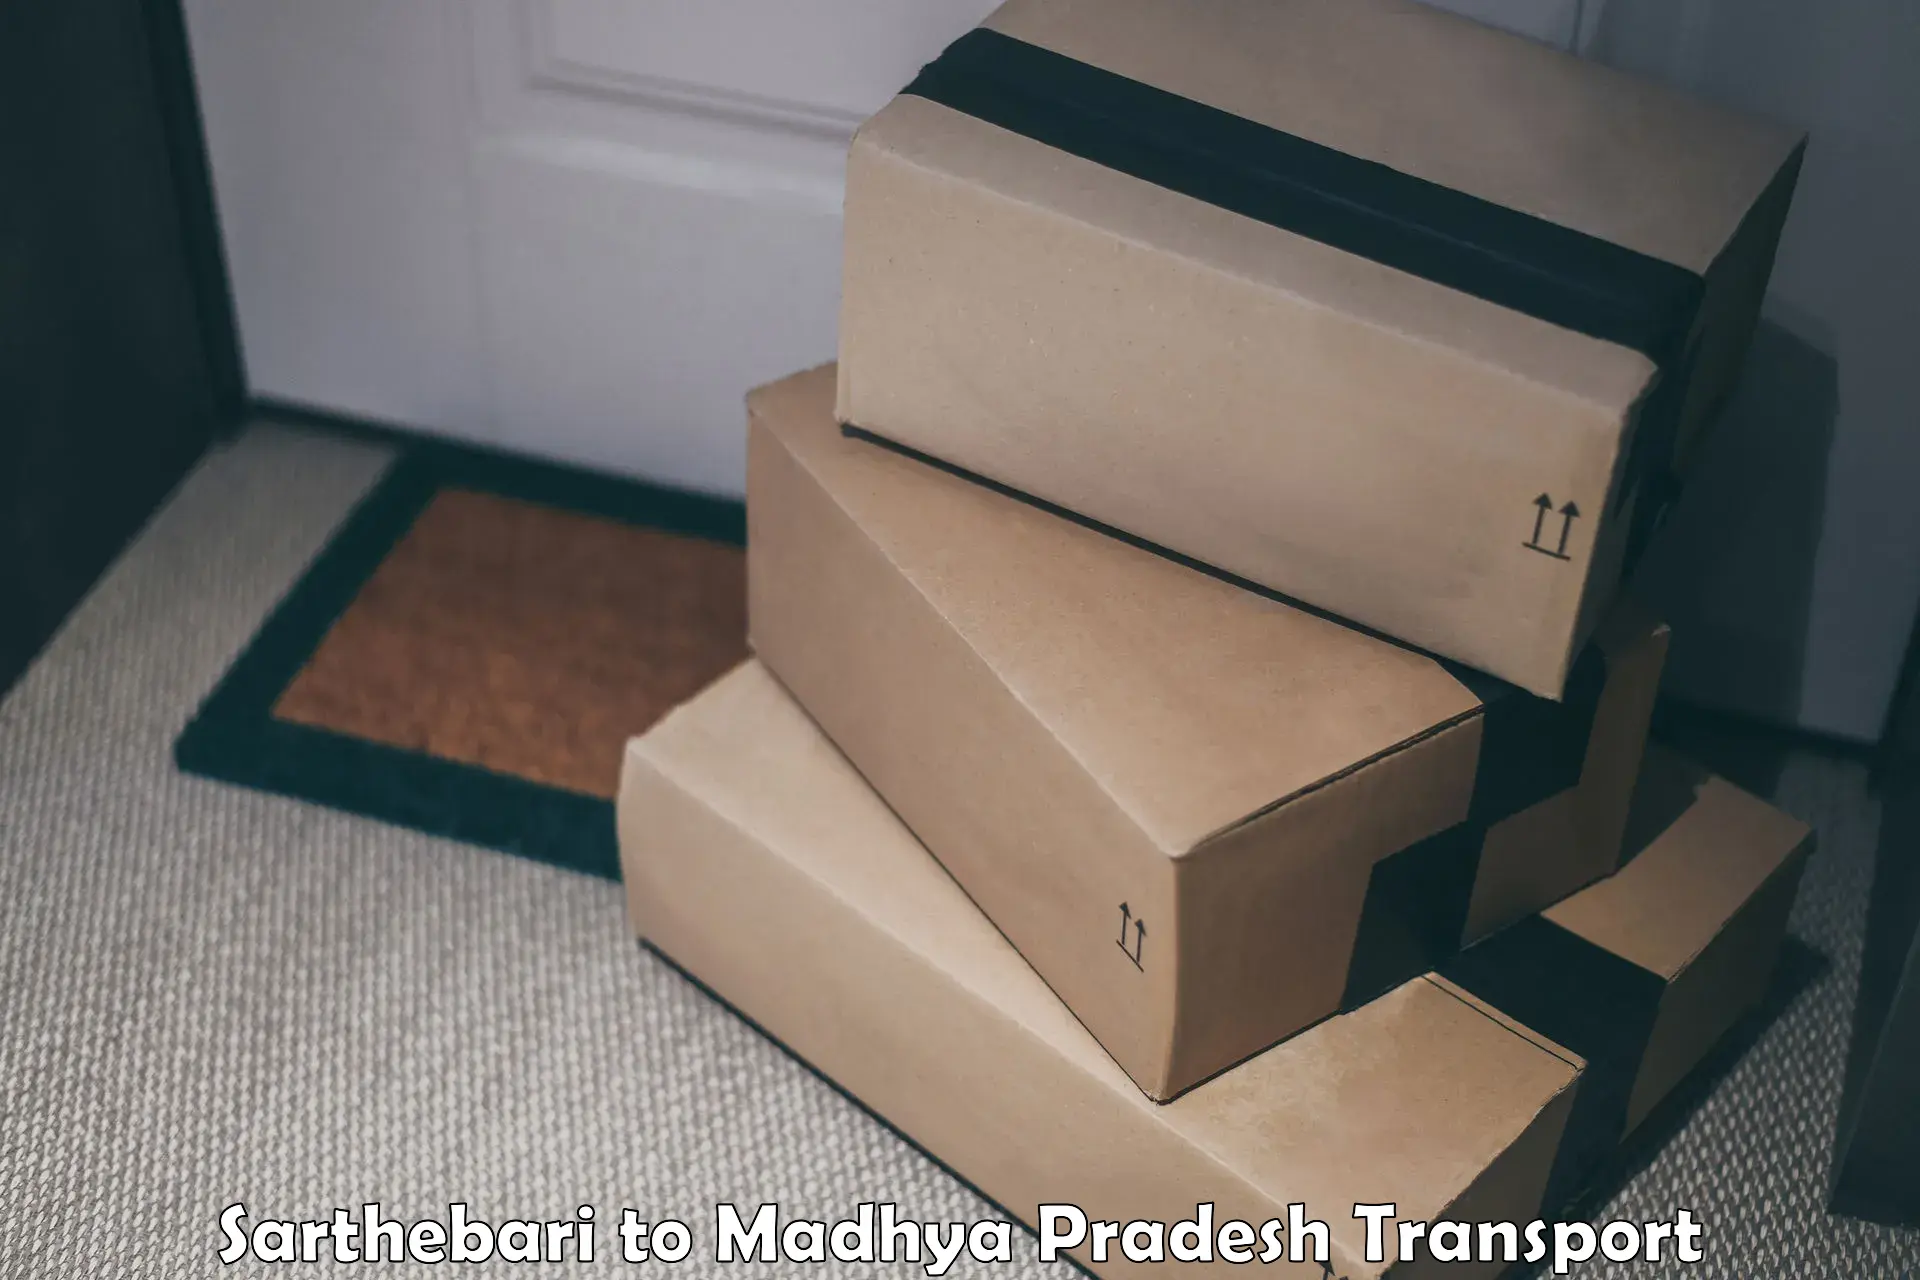 Two wheeler parcel service in Sarthebari to Bhind